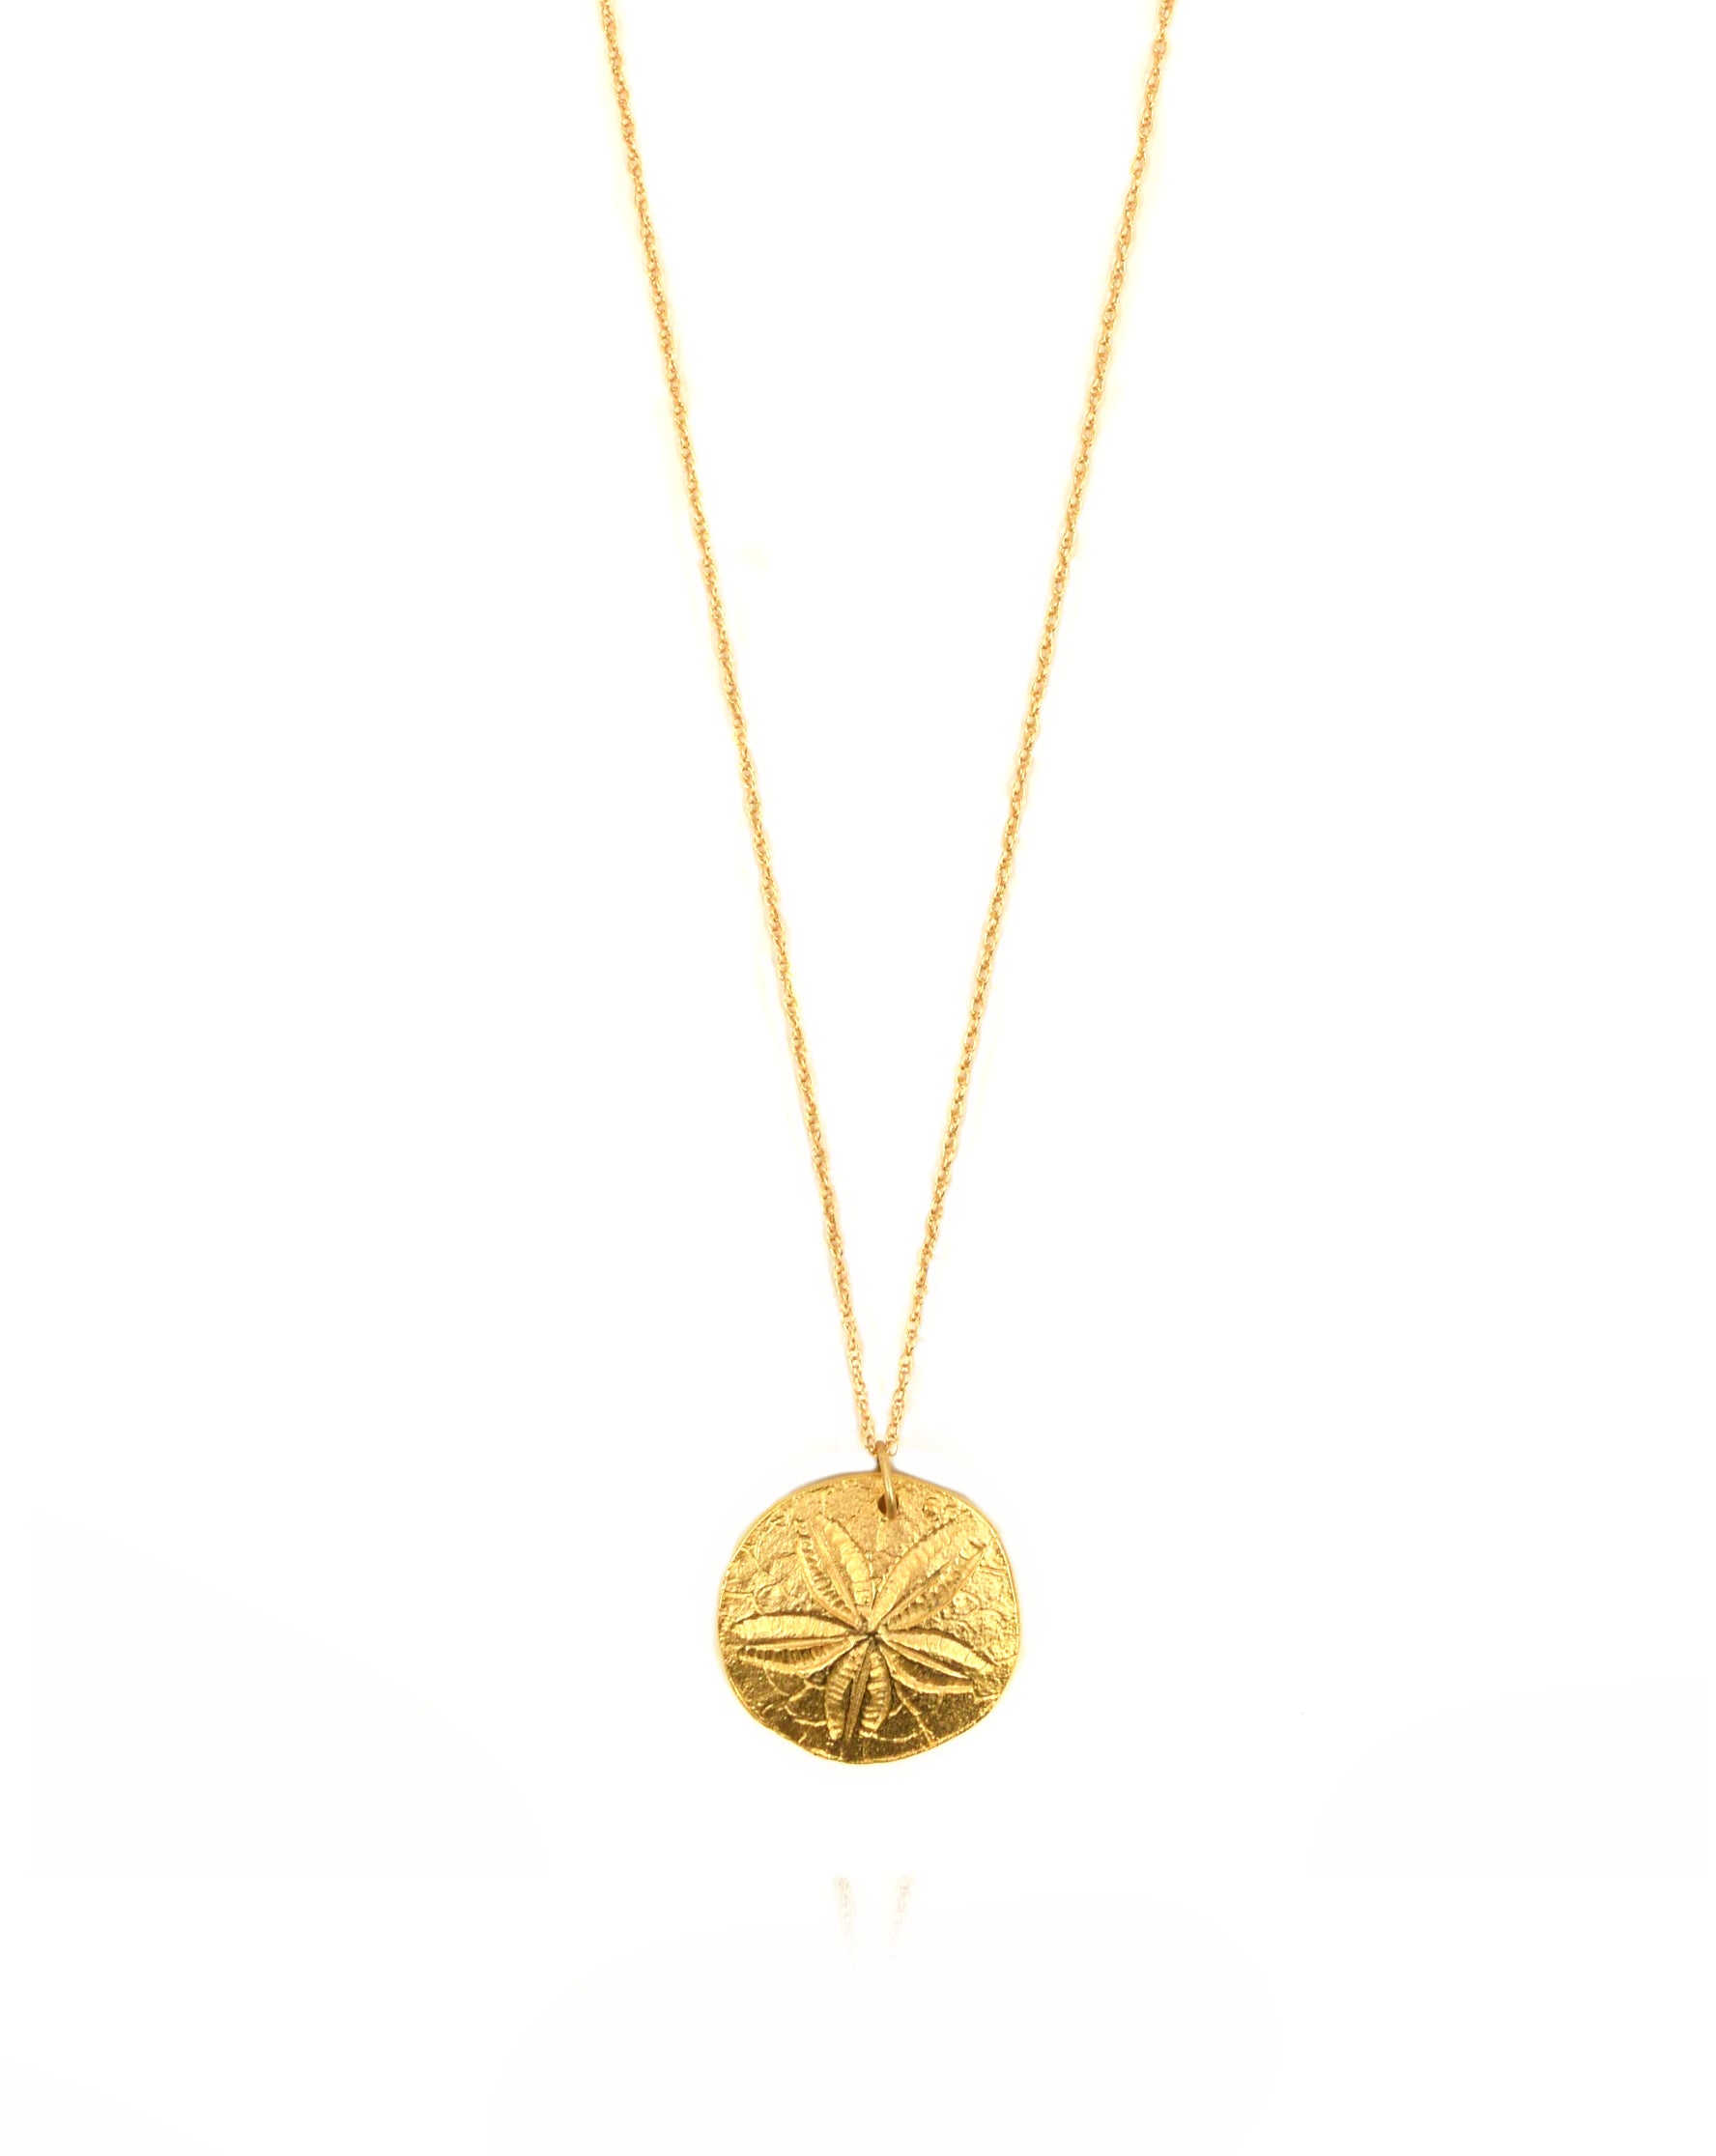 Charleston Sand Dollar Necklace